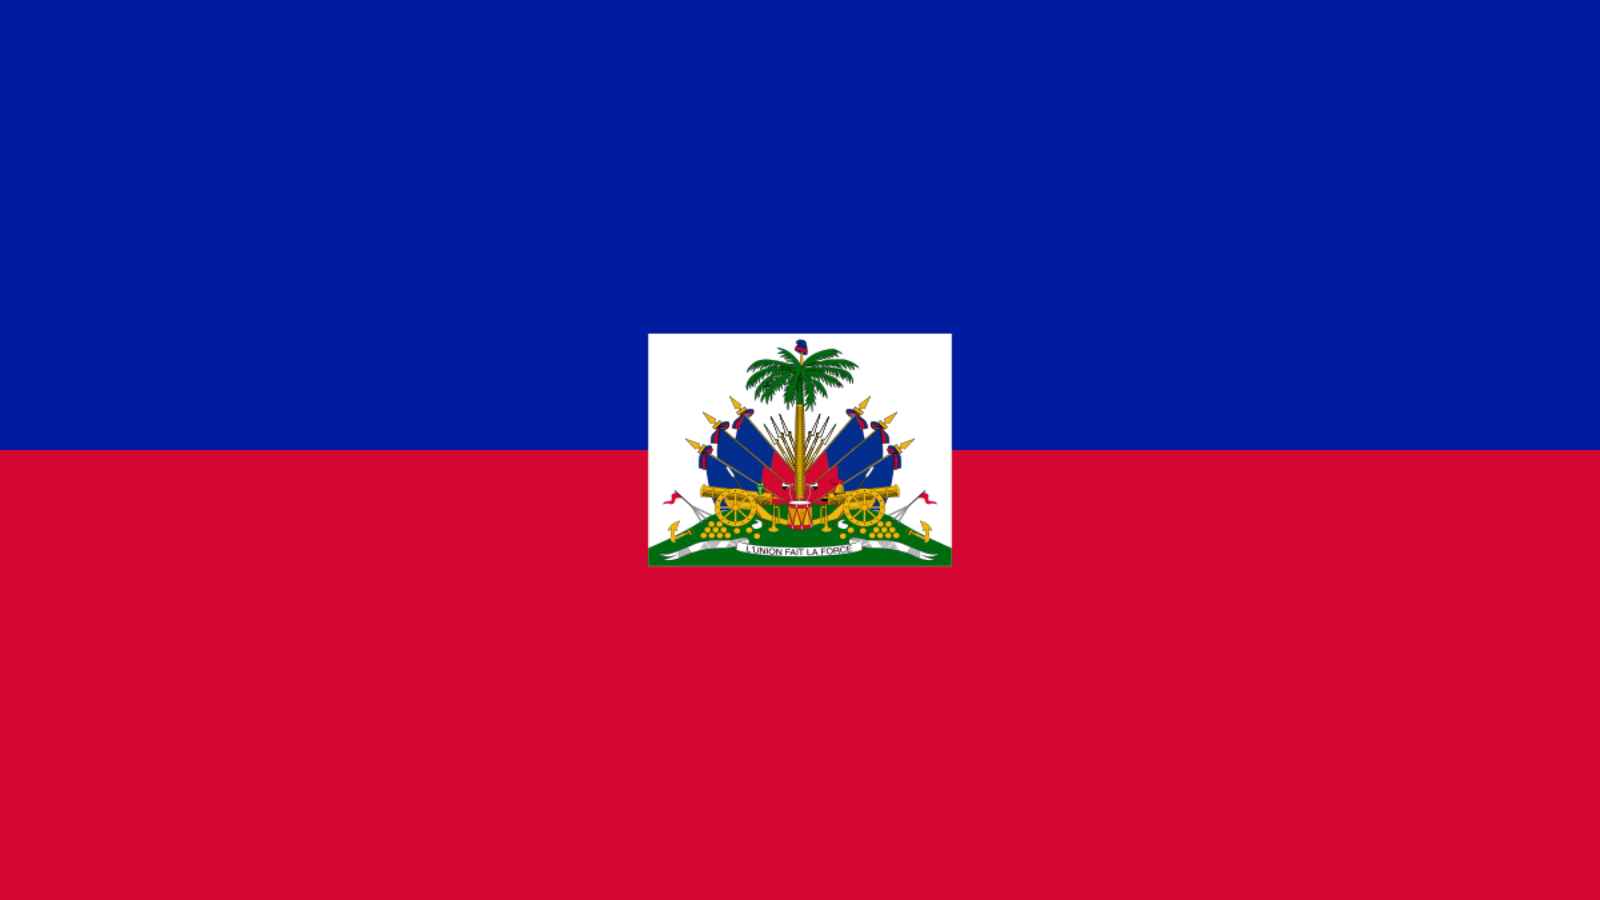 Haiti Independence Day – January 1, 2023